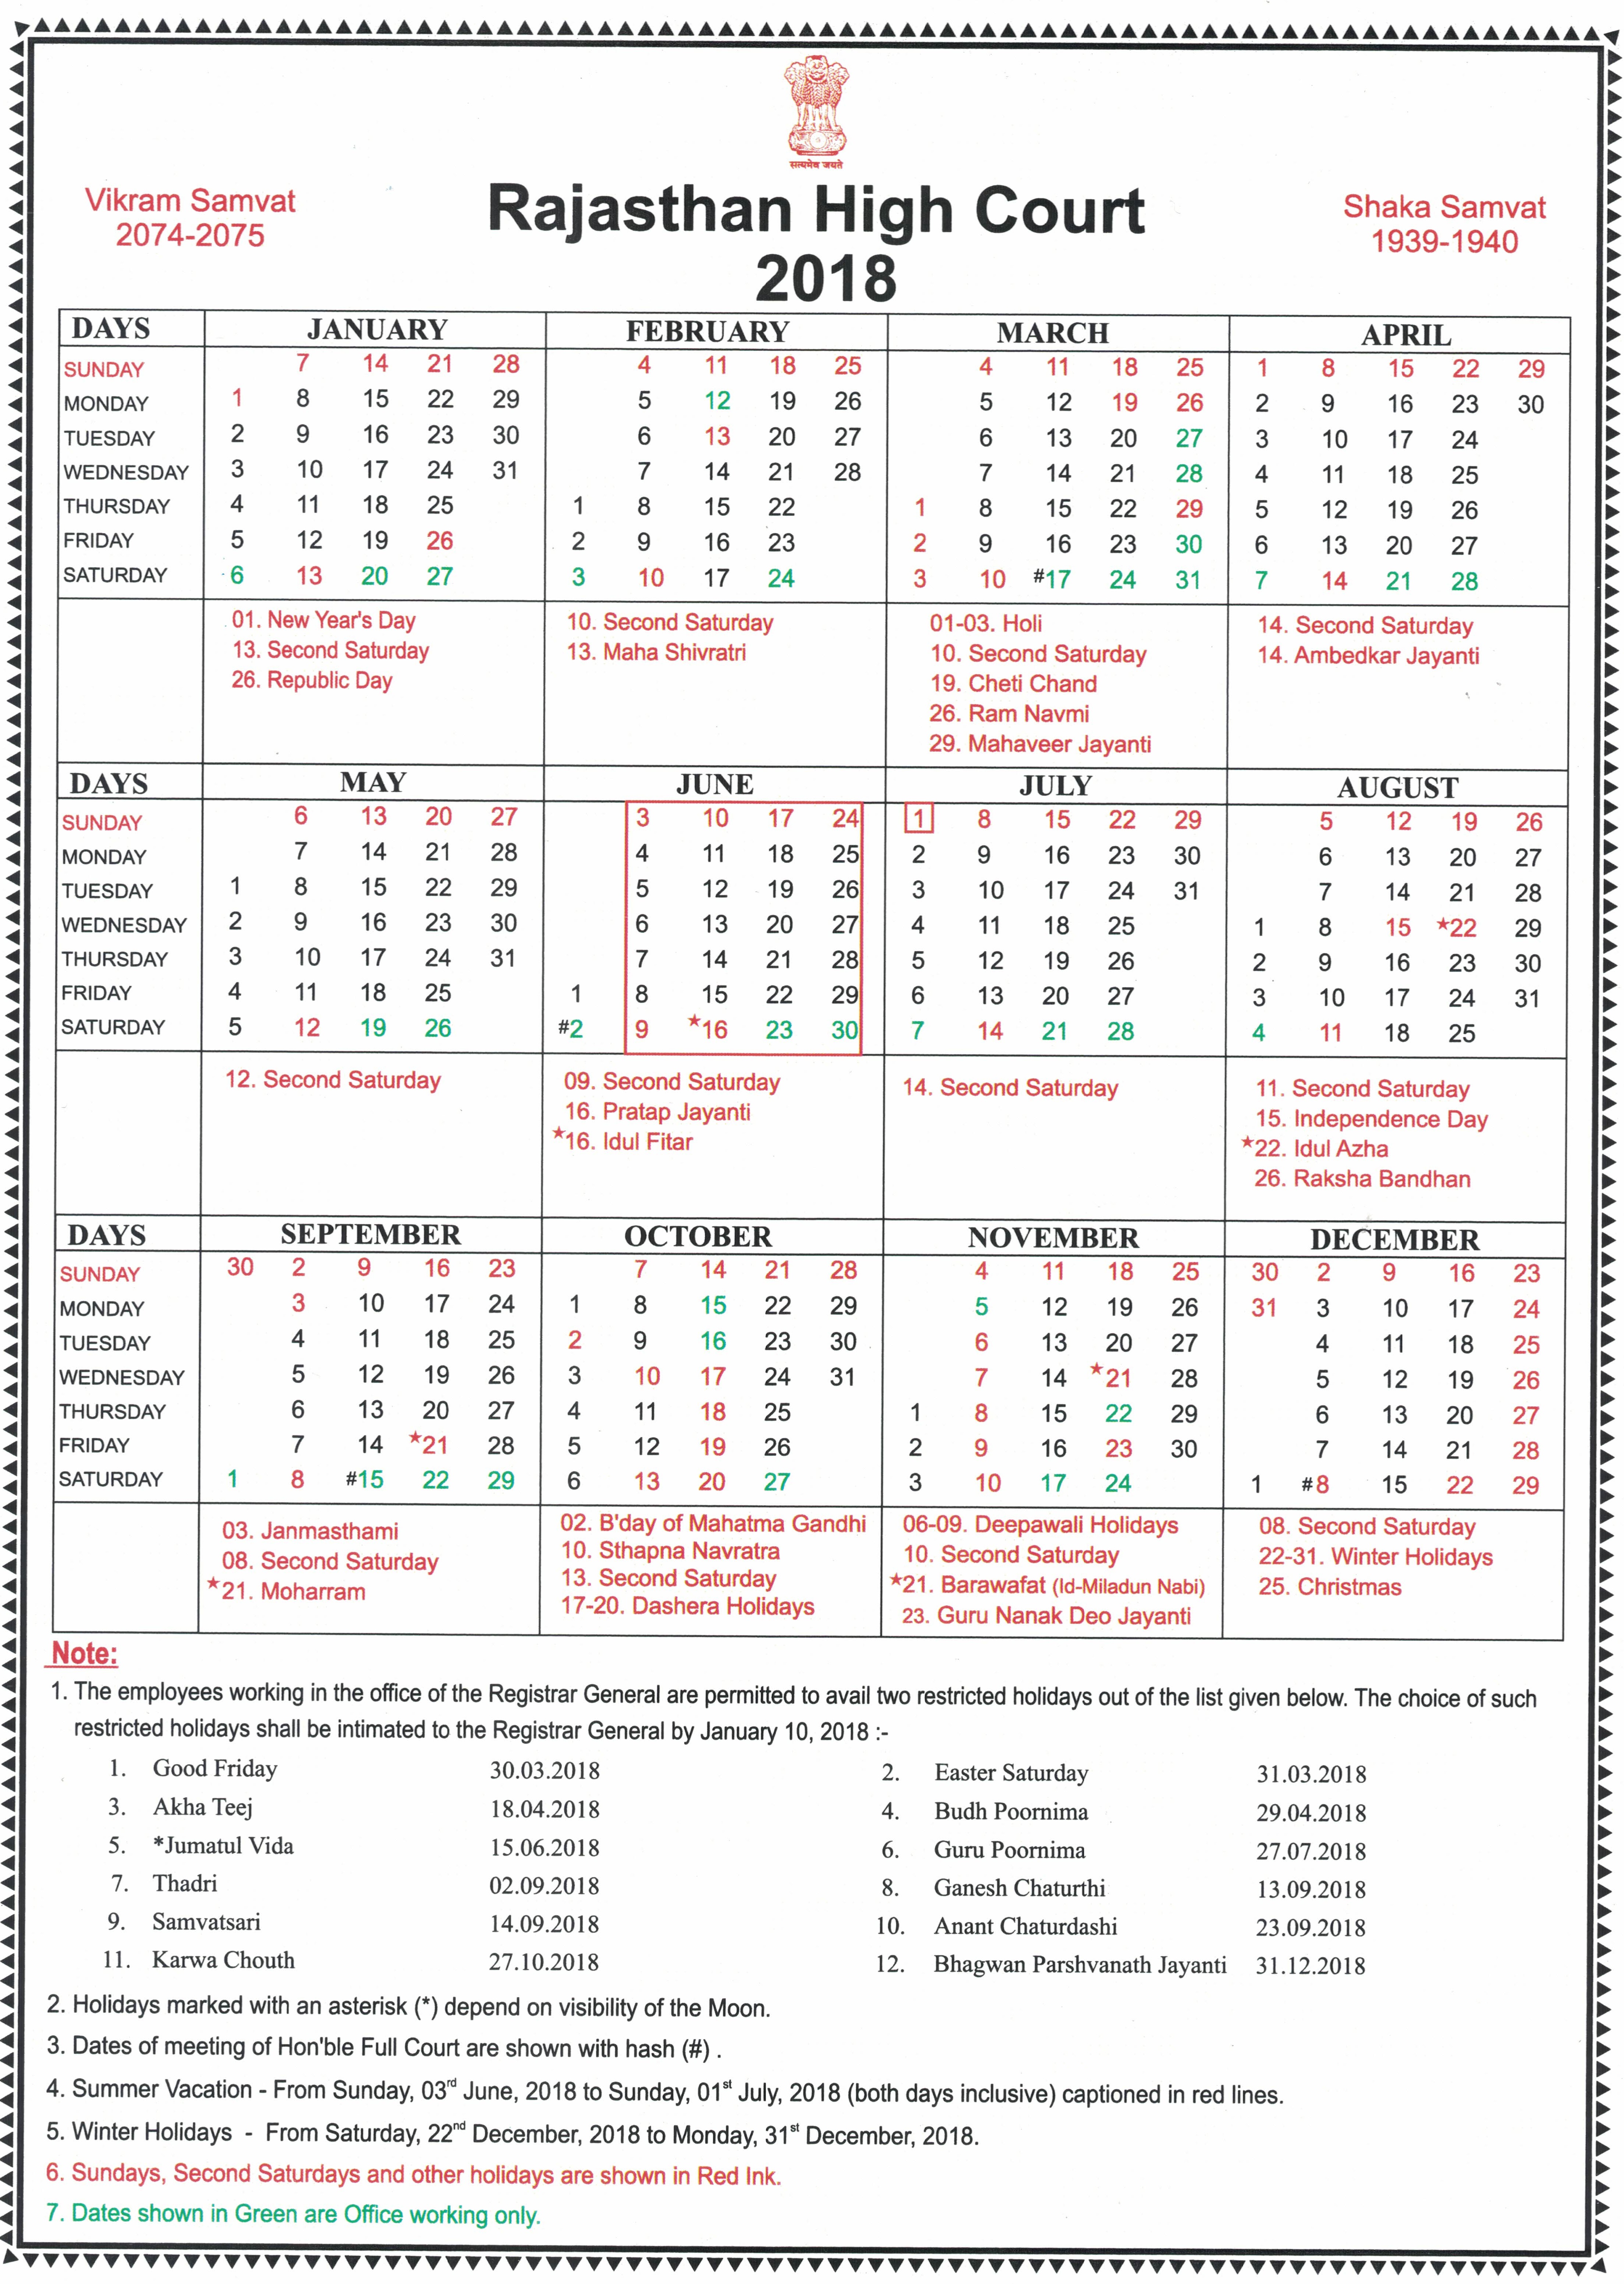 Rajasthan High Court Calendar,2018